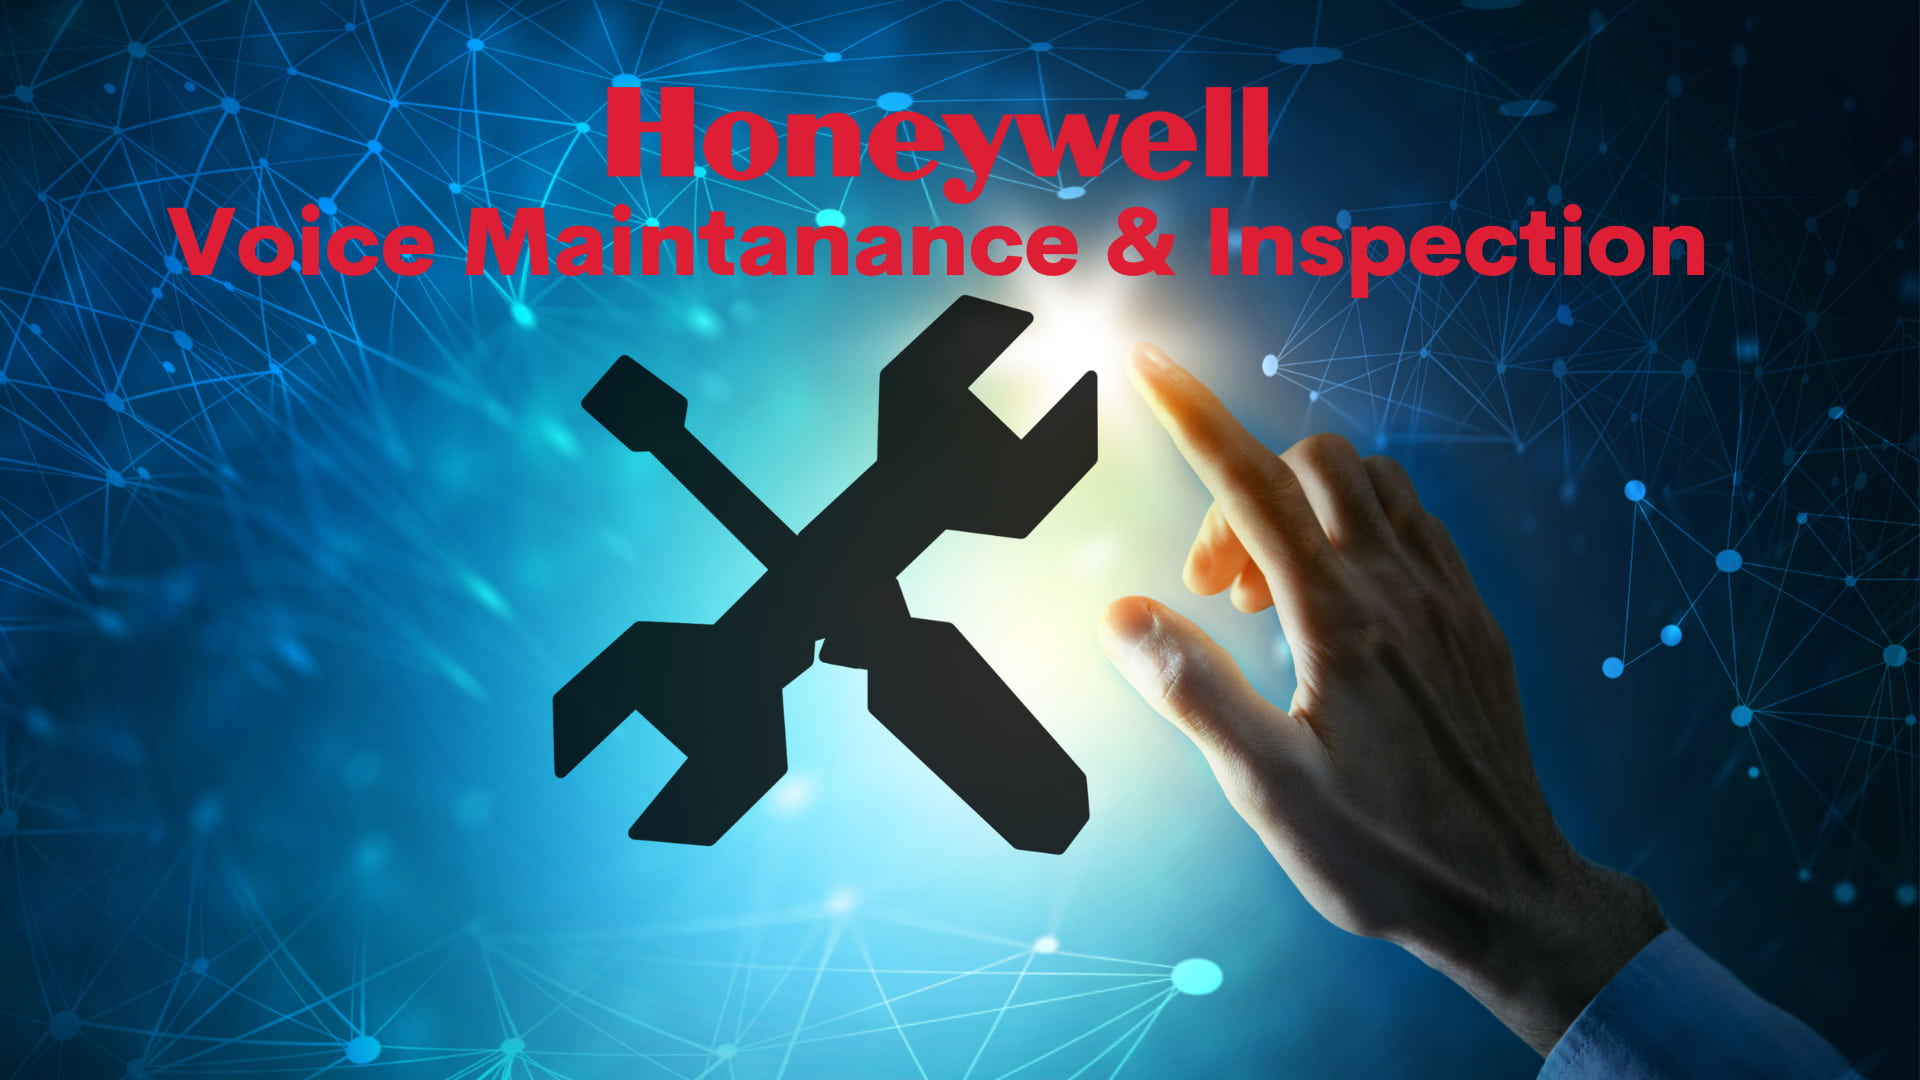 Honeywell Voice, Maintenance & Inspection